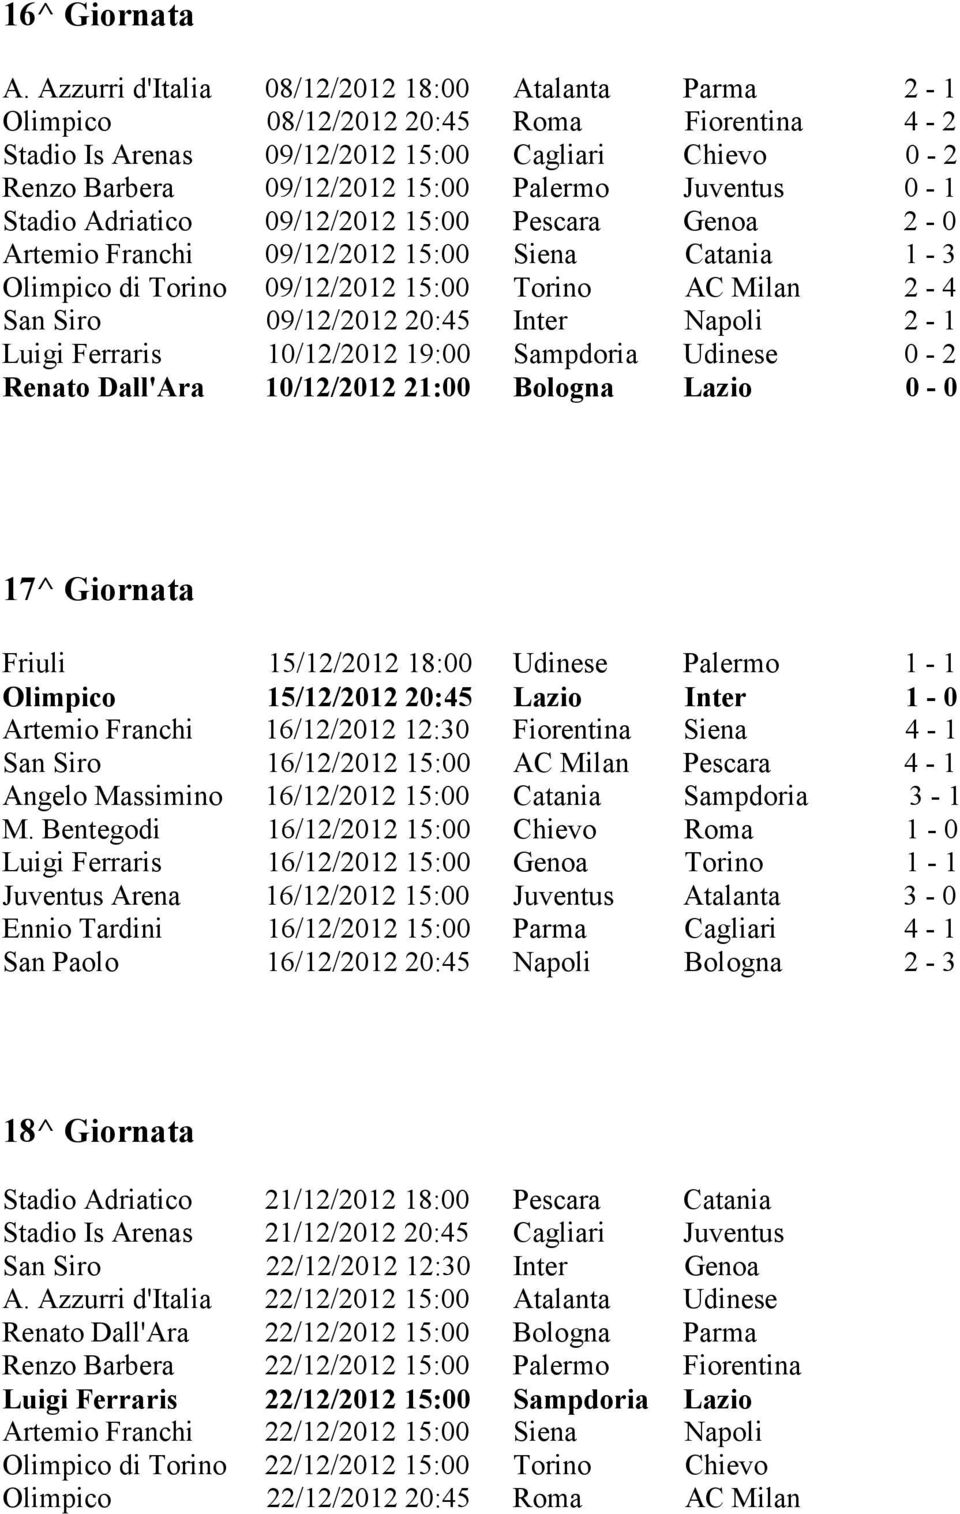 Juventus 0-1 Stadio Adriatico 09/12/2012 15:00 Pescara Genoa 2-0 Artemio Franchi 09/12/2012 15:00 Siena Catania 1-3 Olimpico di Torino 09/12/2012 15:00 Torino AC Milan 2-4 San Siro 09/12/2012 20:45